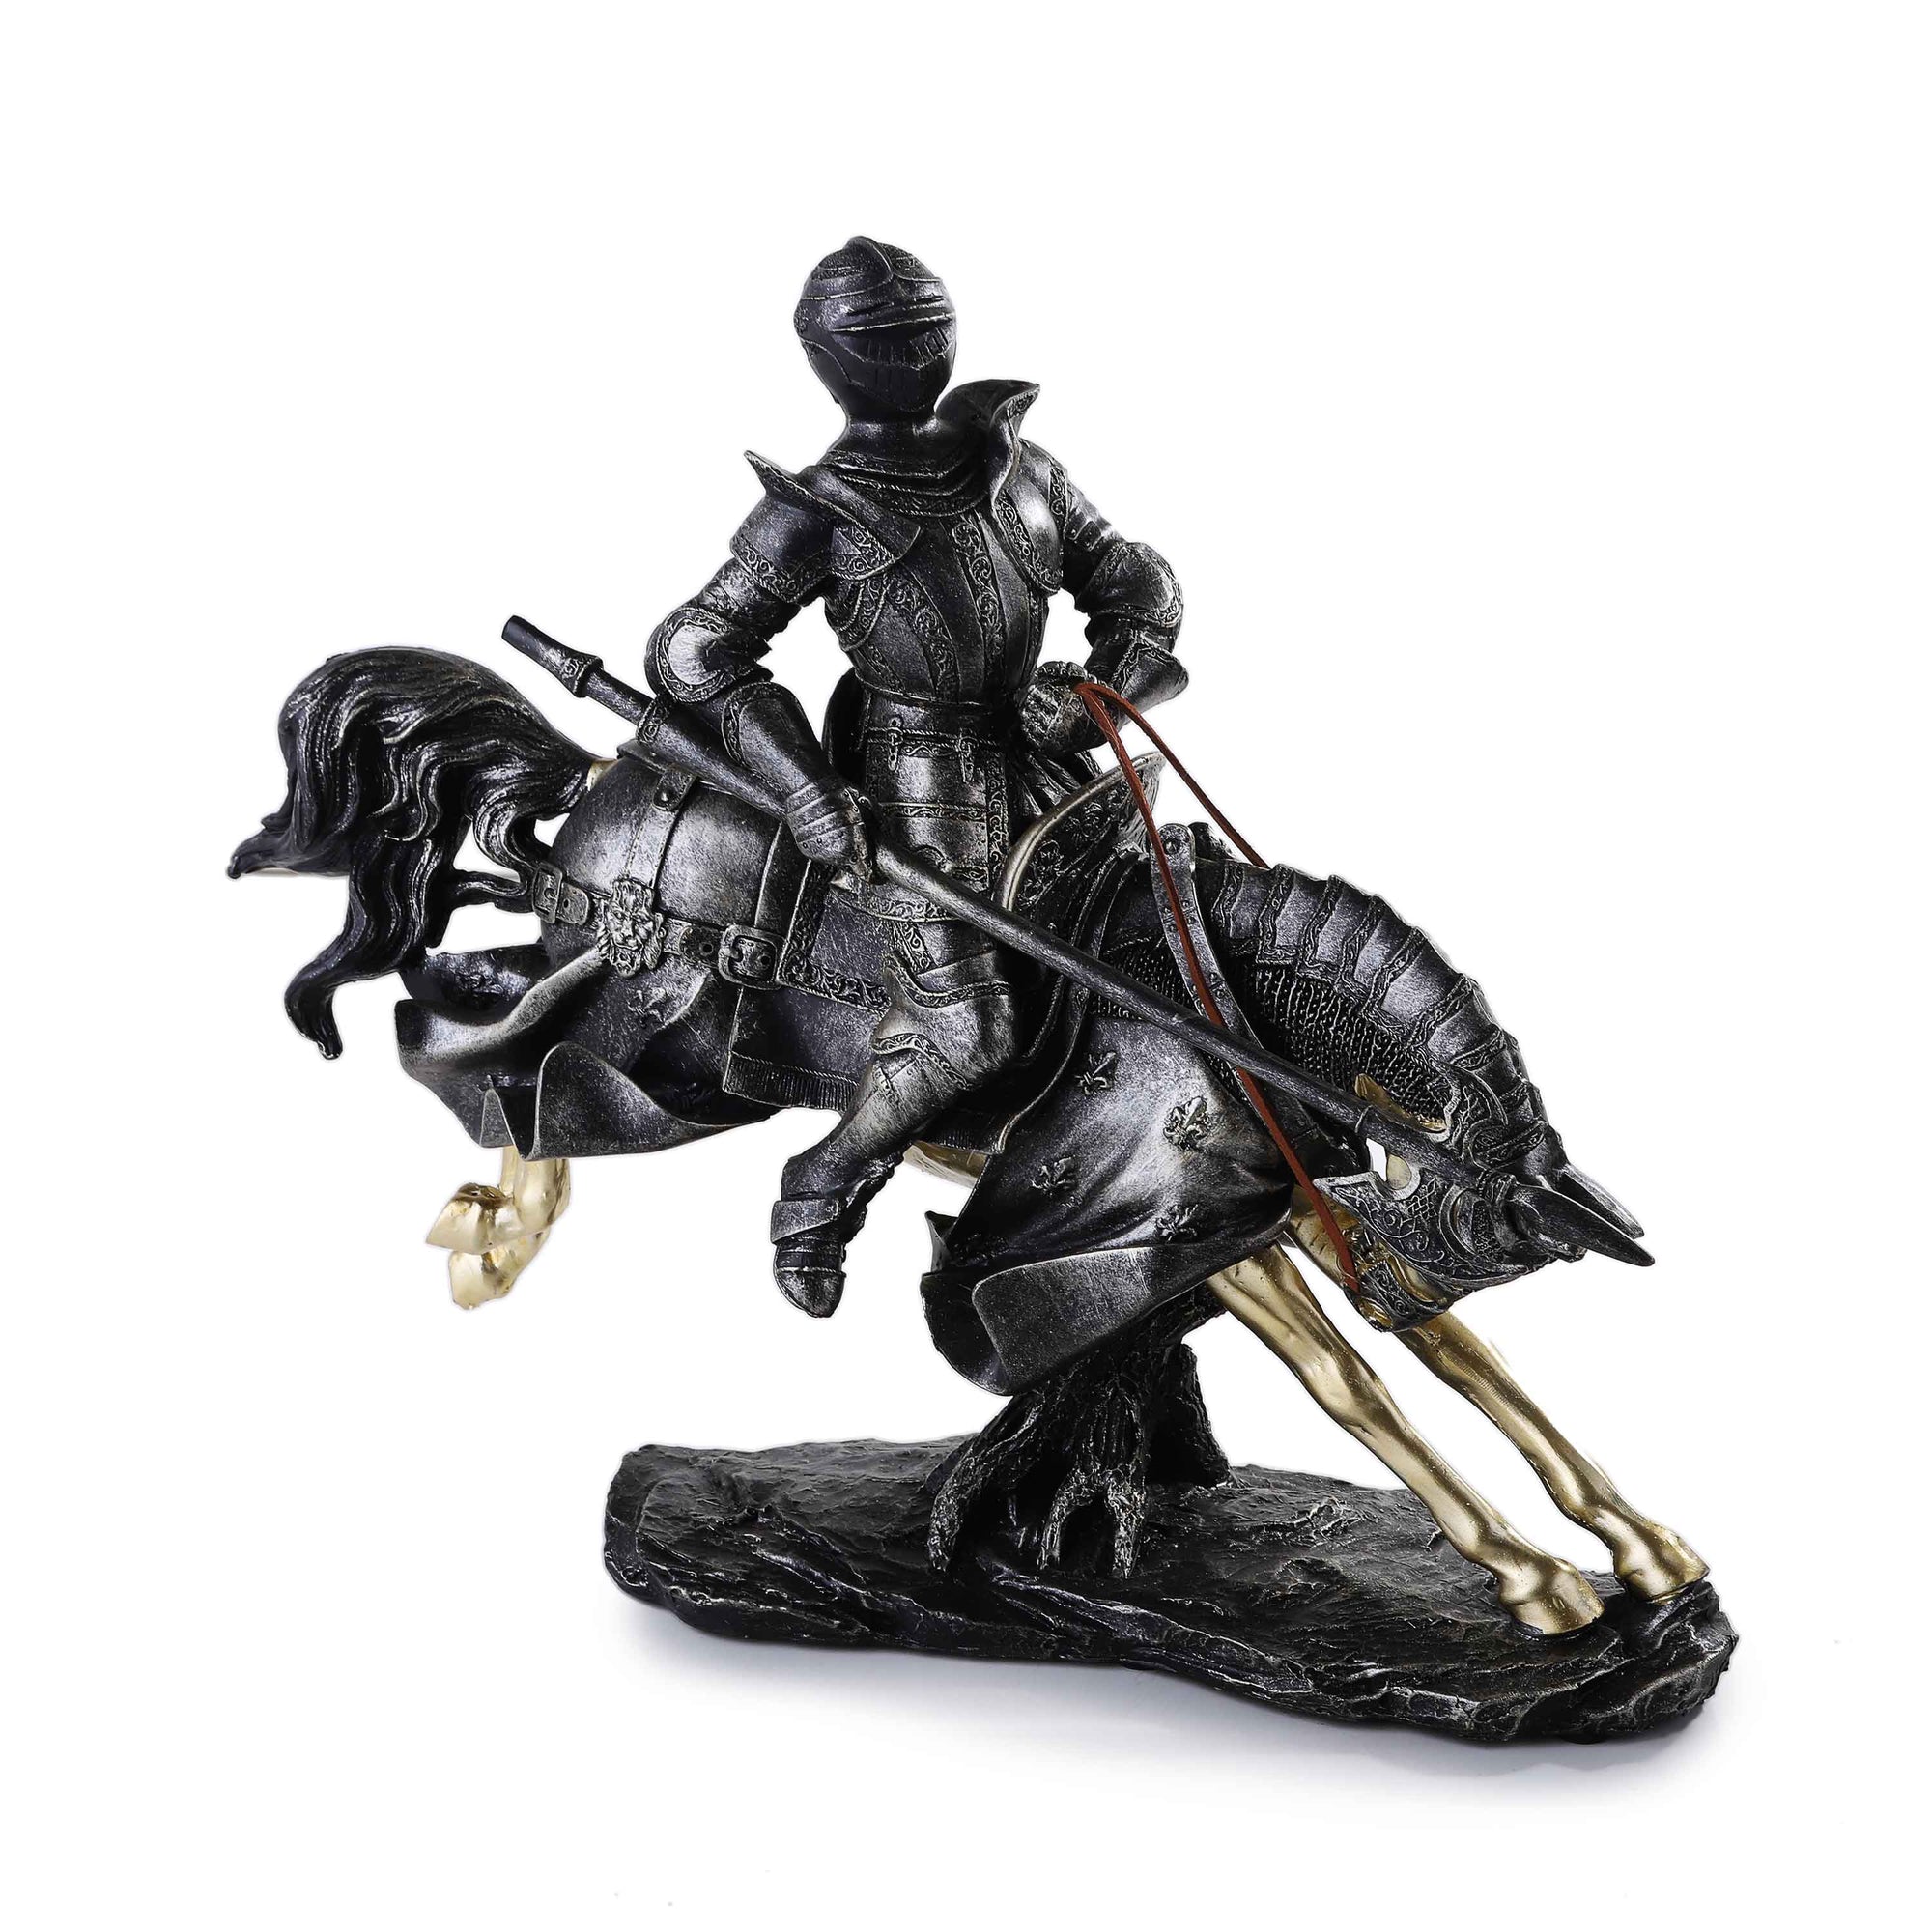 Vintage European Knight on Horse Statue